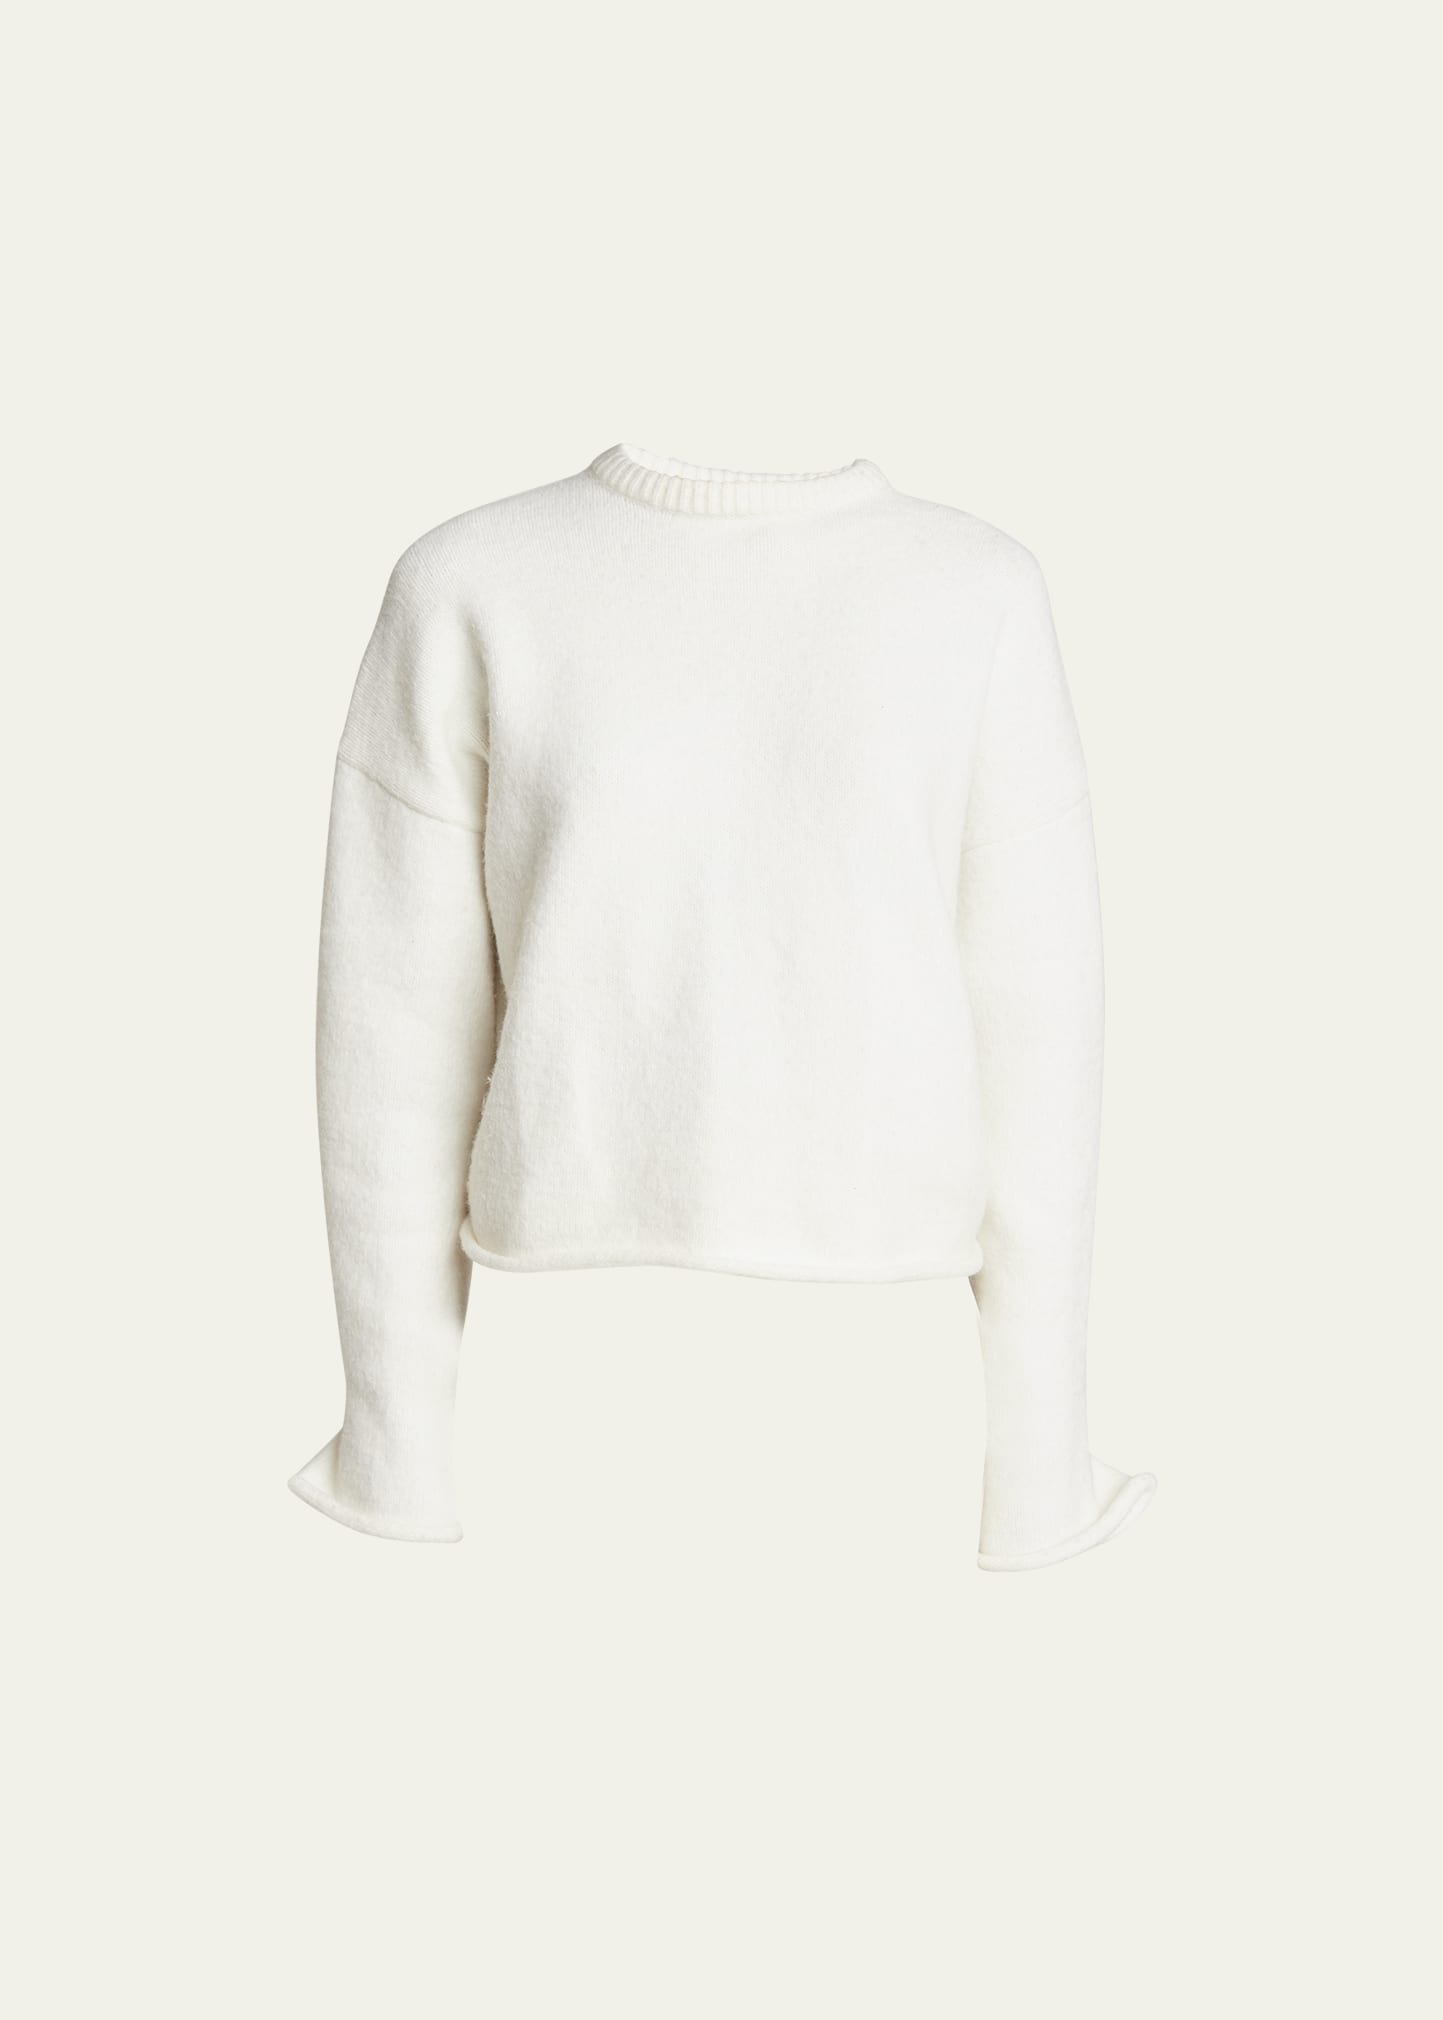 Proenza Schouler White Label Tara Crewneck Sweater In Off White